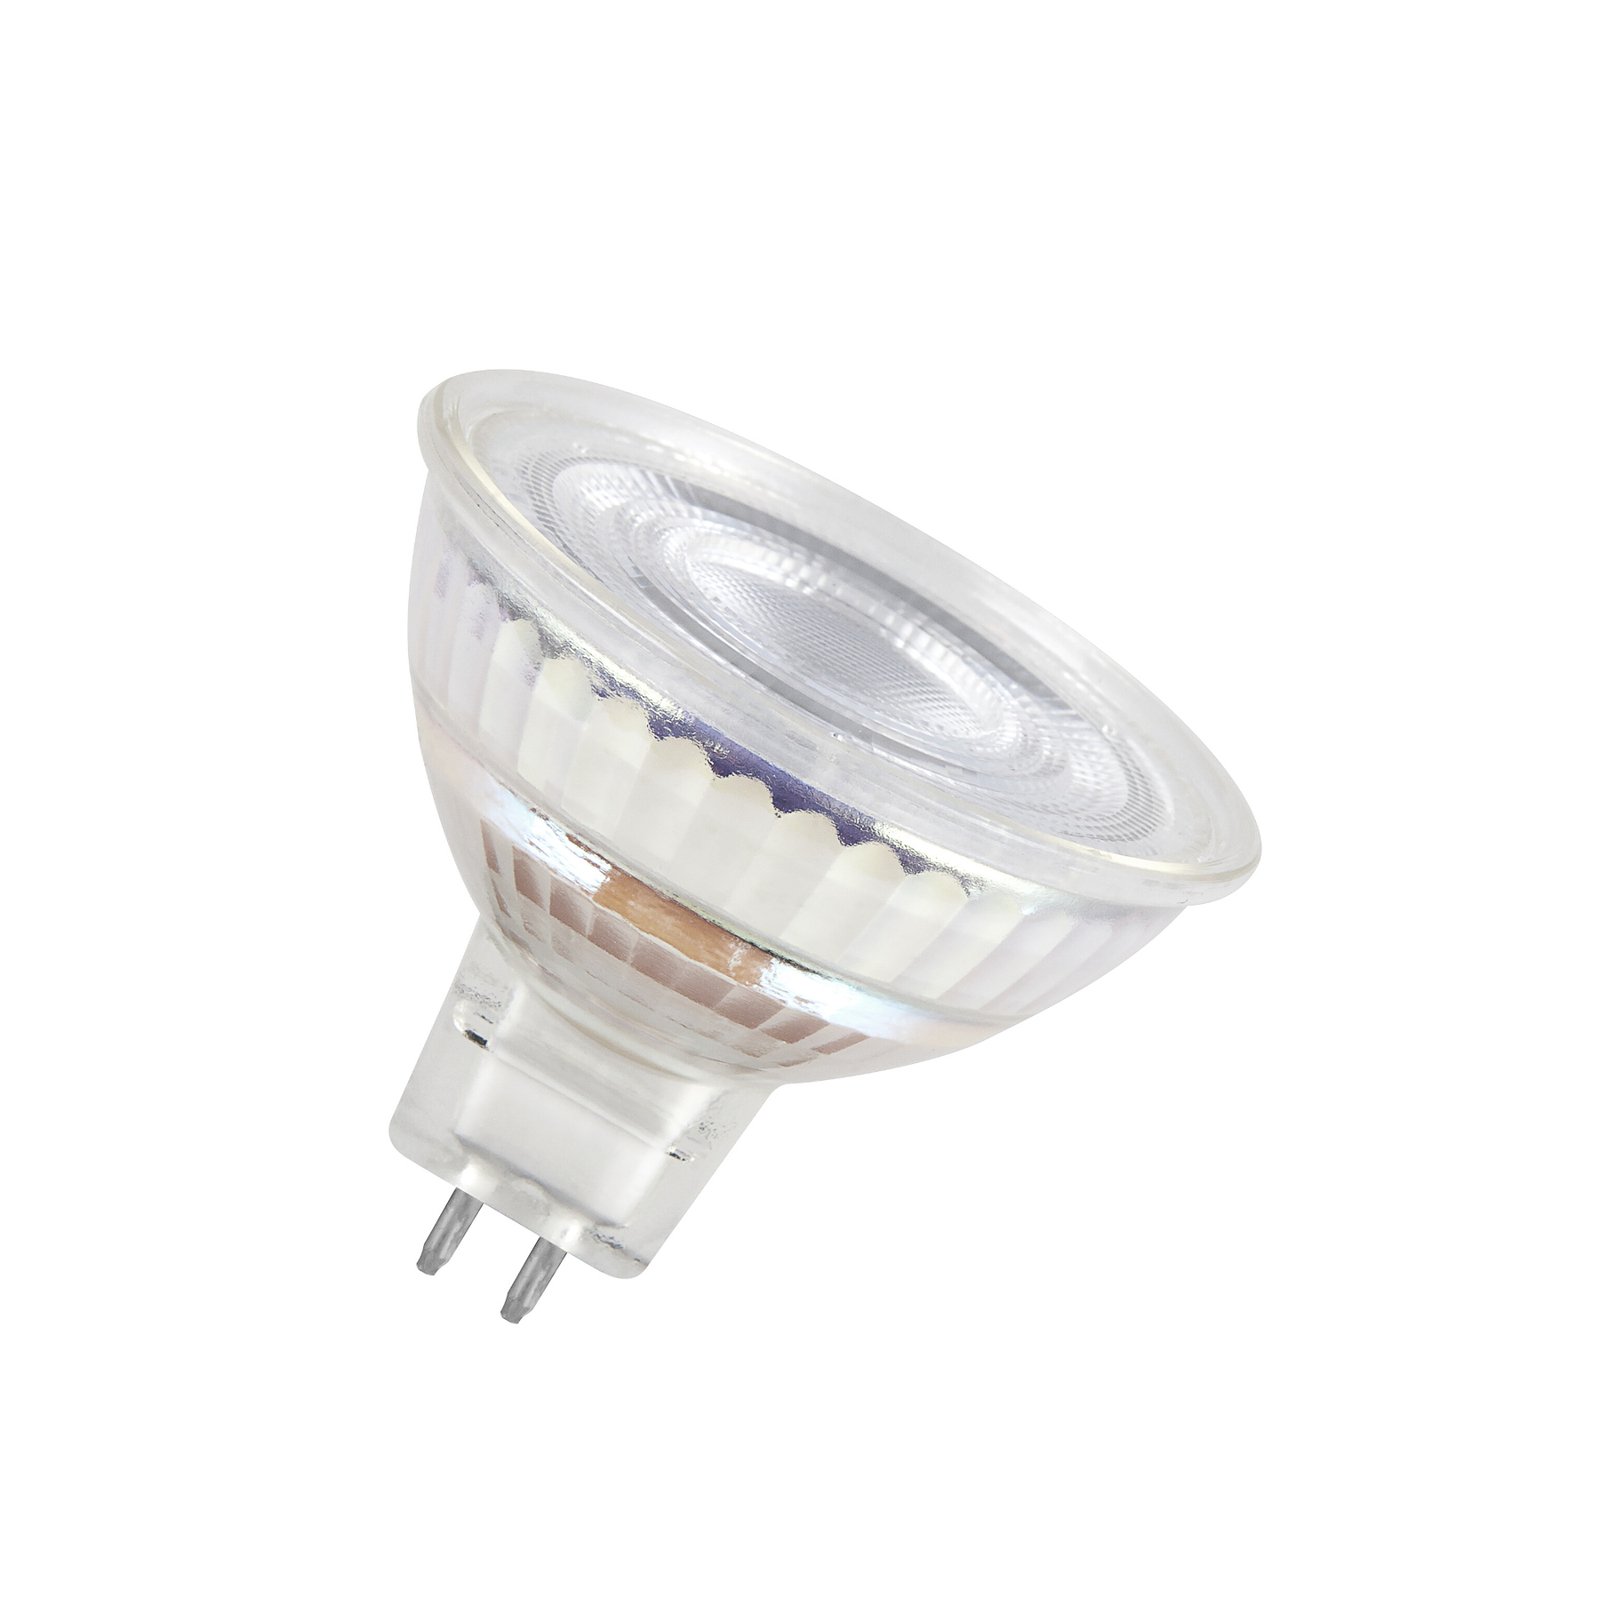 OSRAM GU5.3 LED bulb set of 3, 6.5 W, 12 V, 2,700 K, 36°